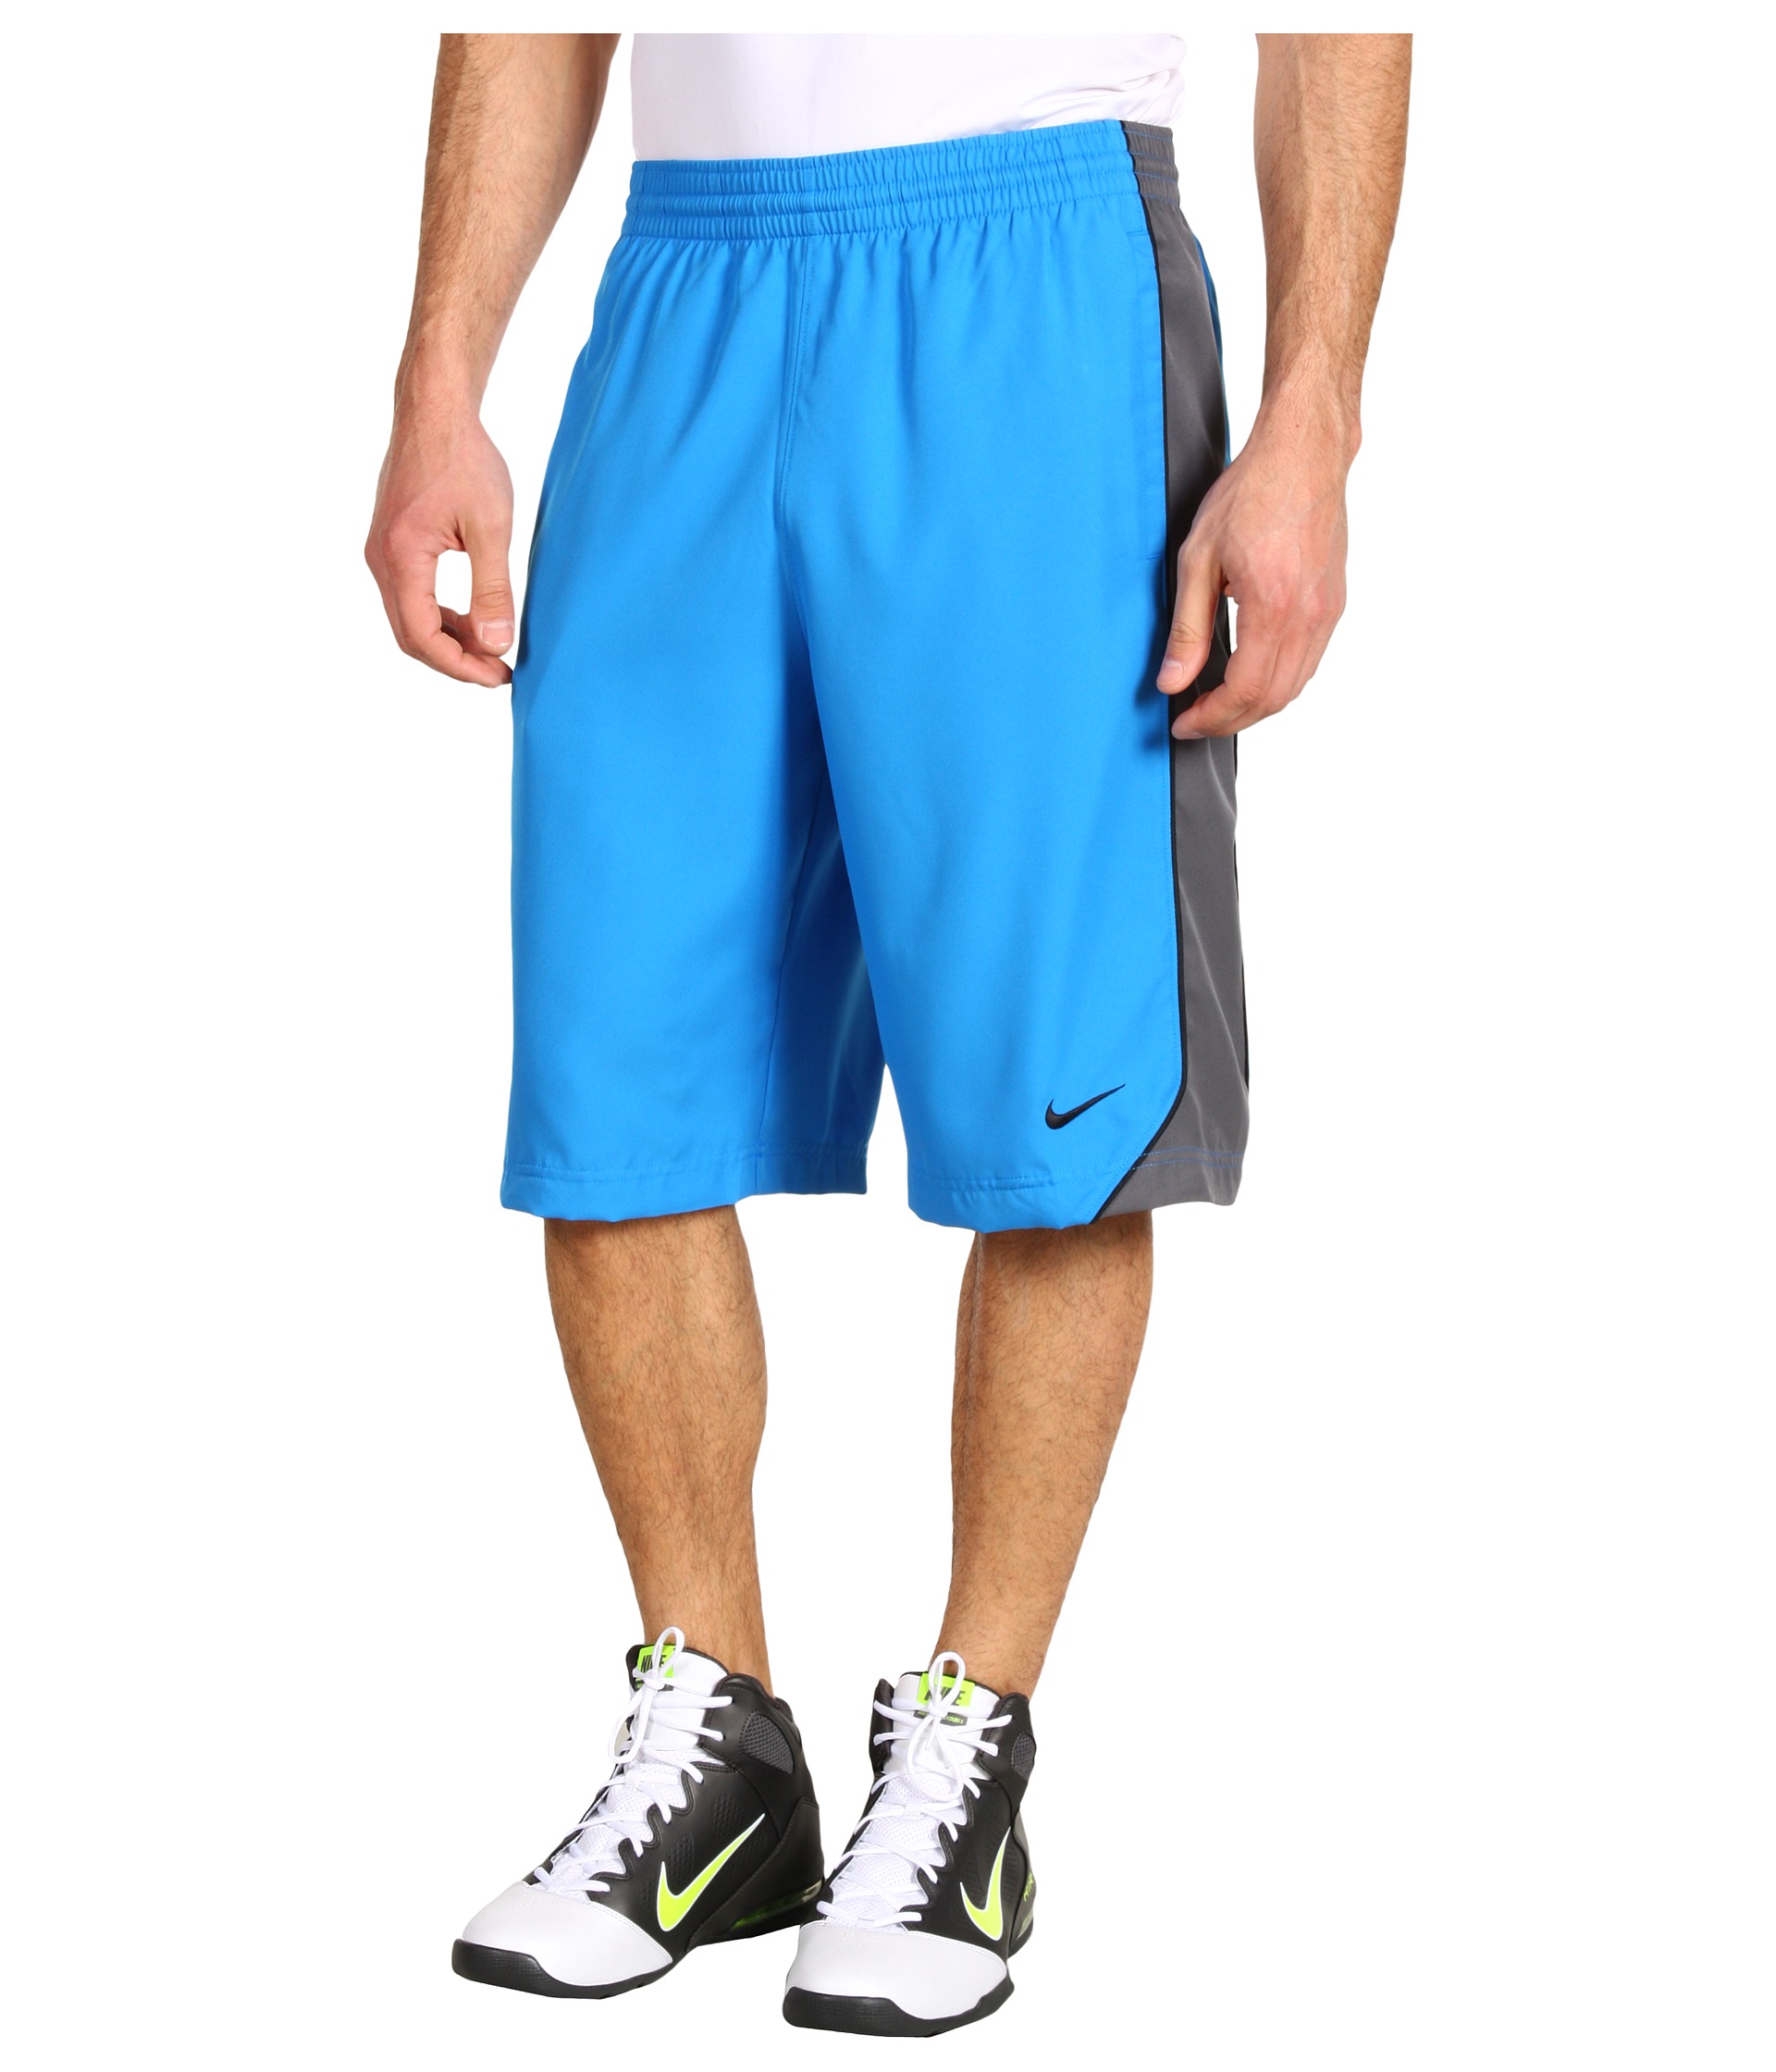 Nike Hustle Woven Short $35.99 $40.00 